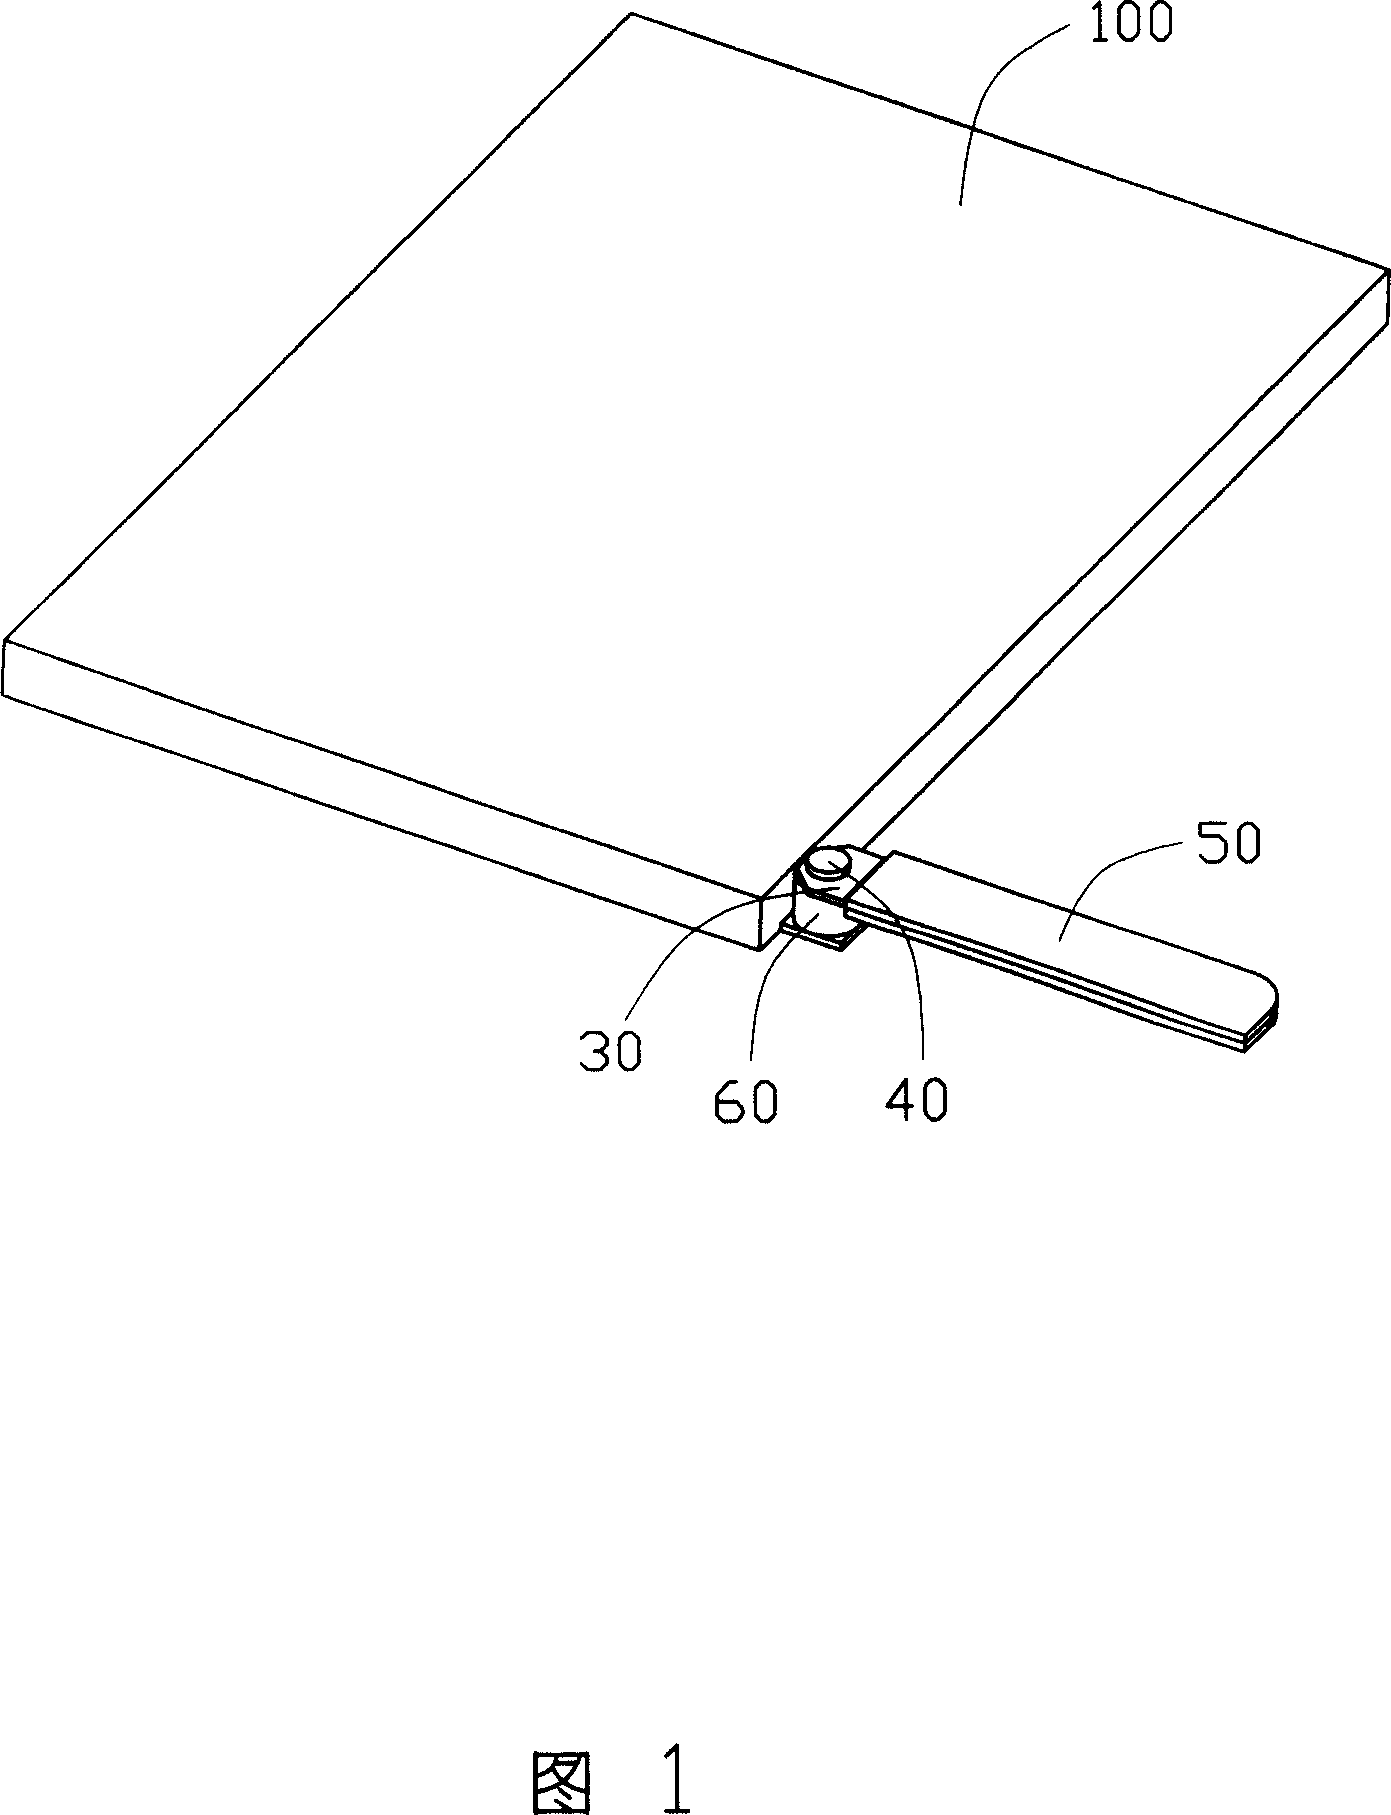 Single pole antenna